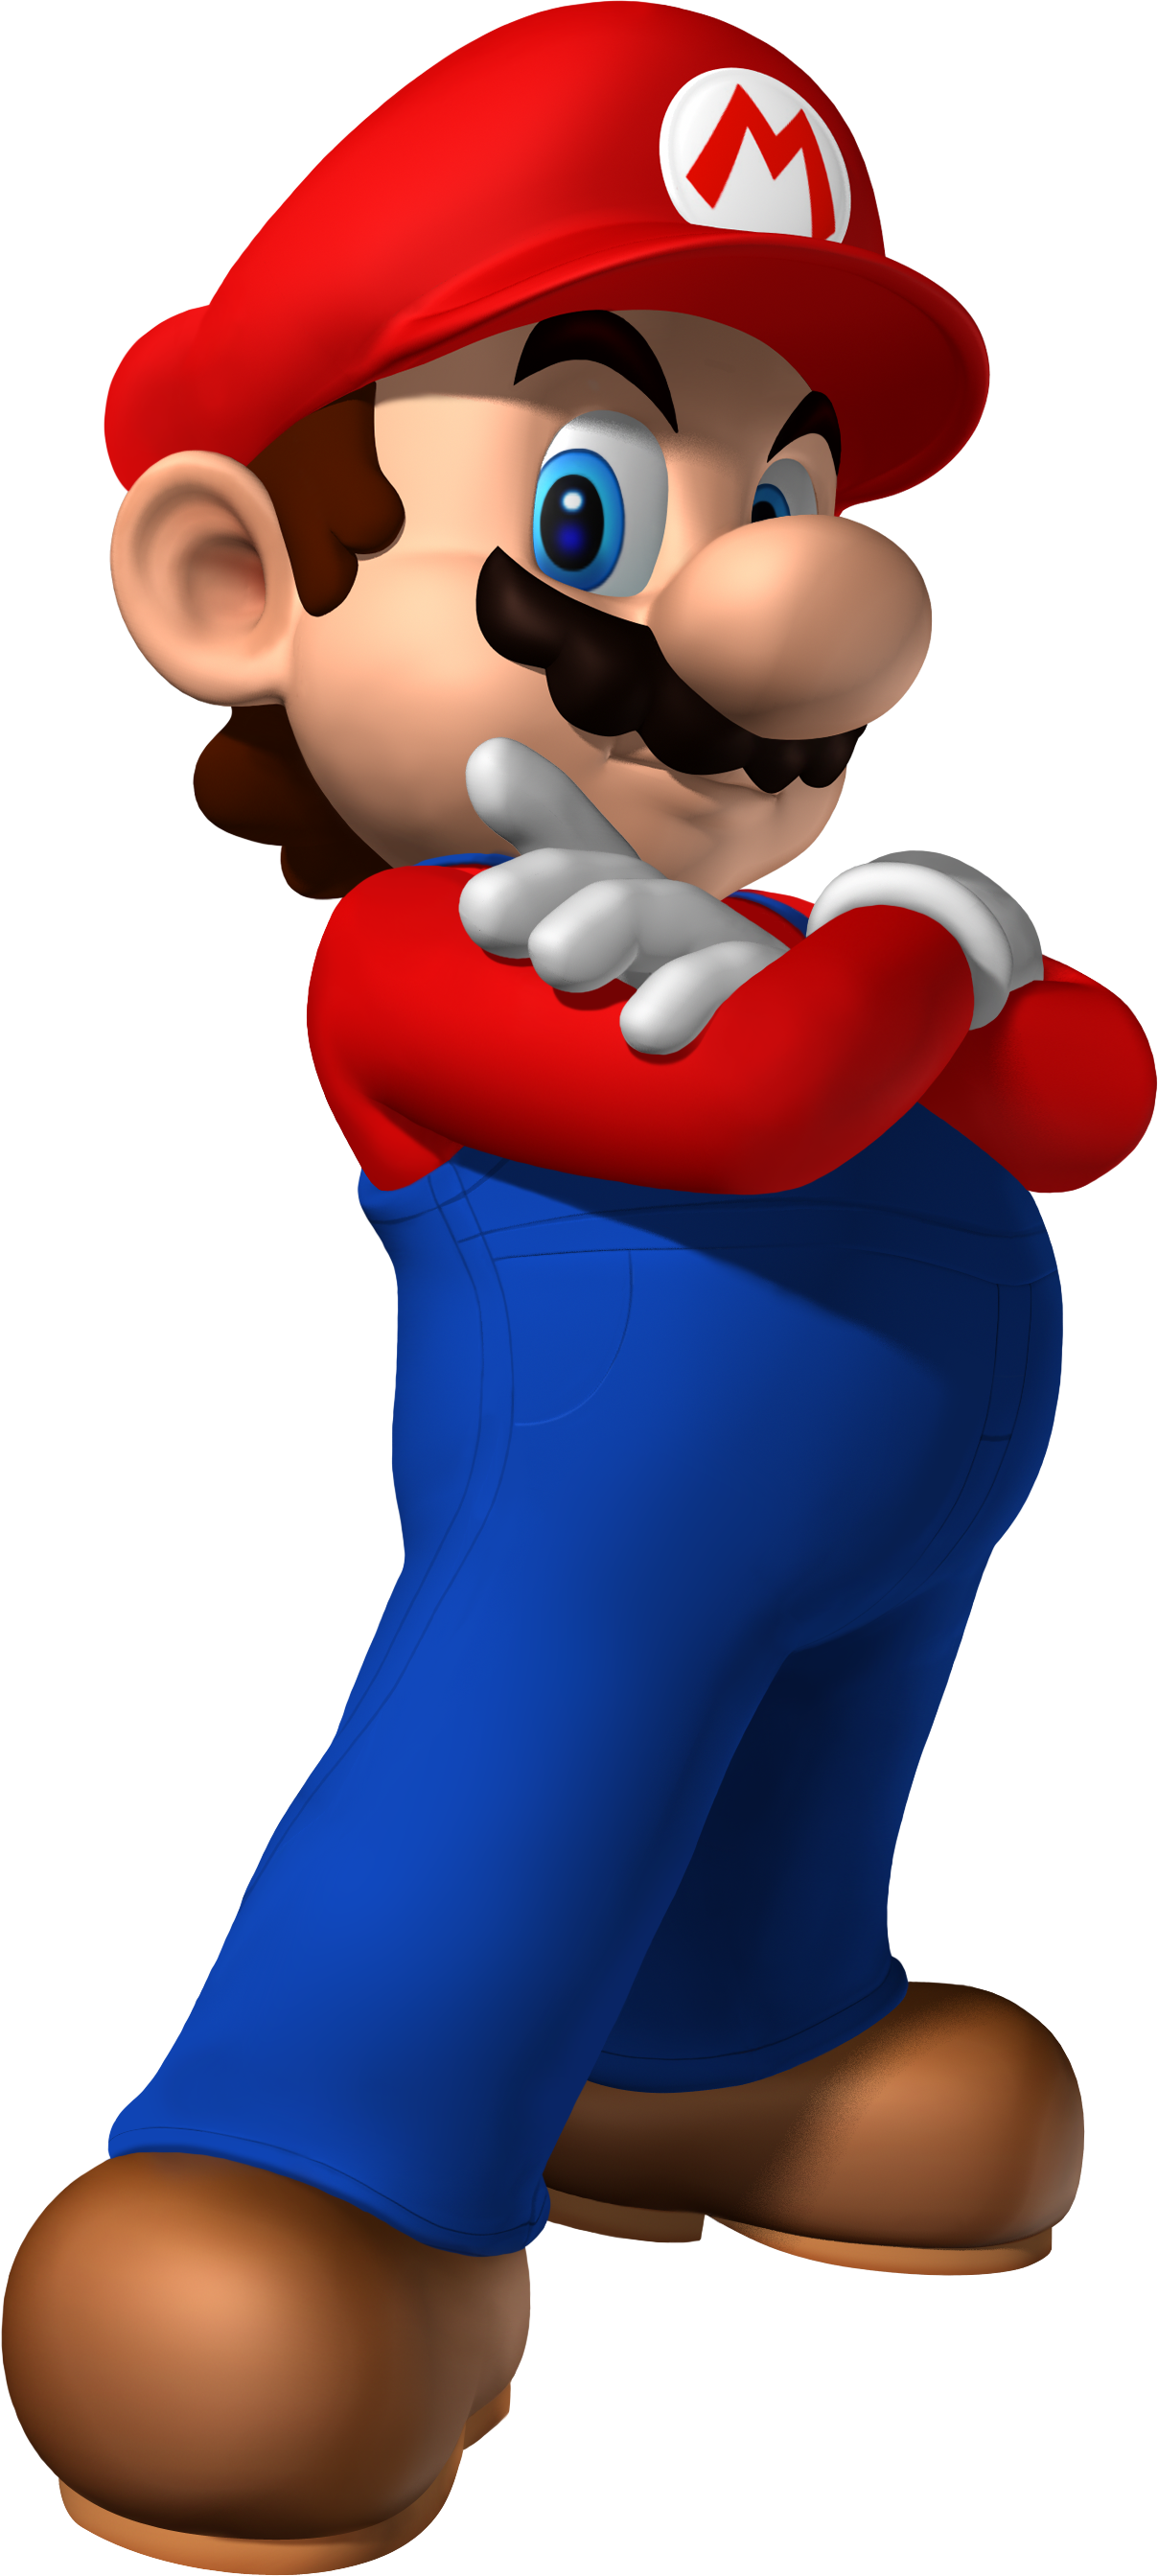 Mario - Mario Kart Wii.png